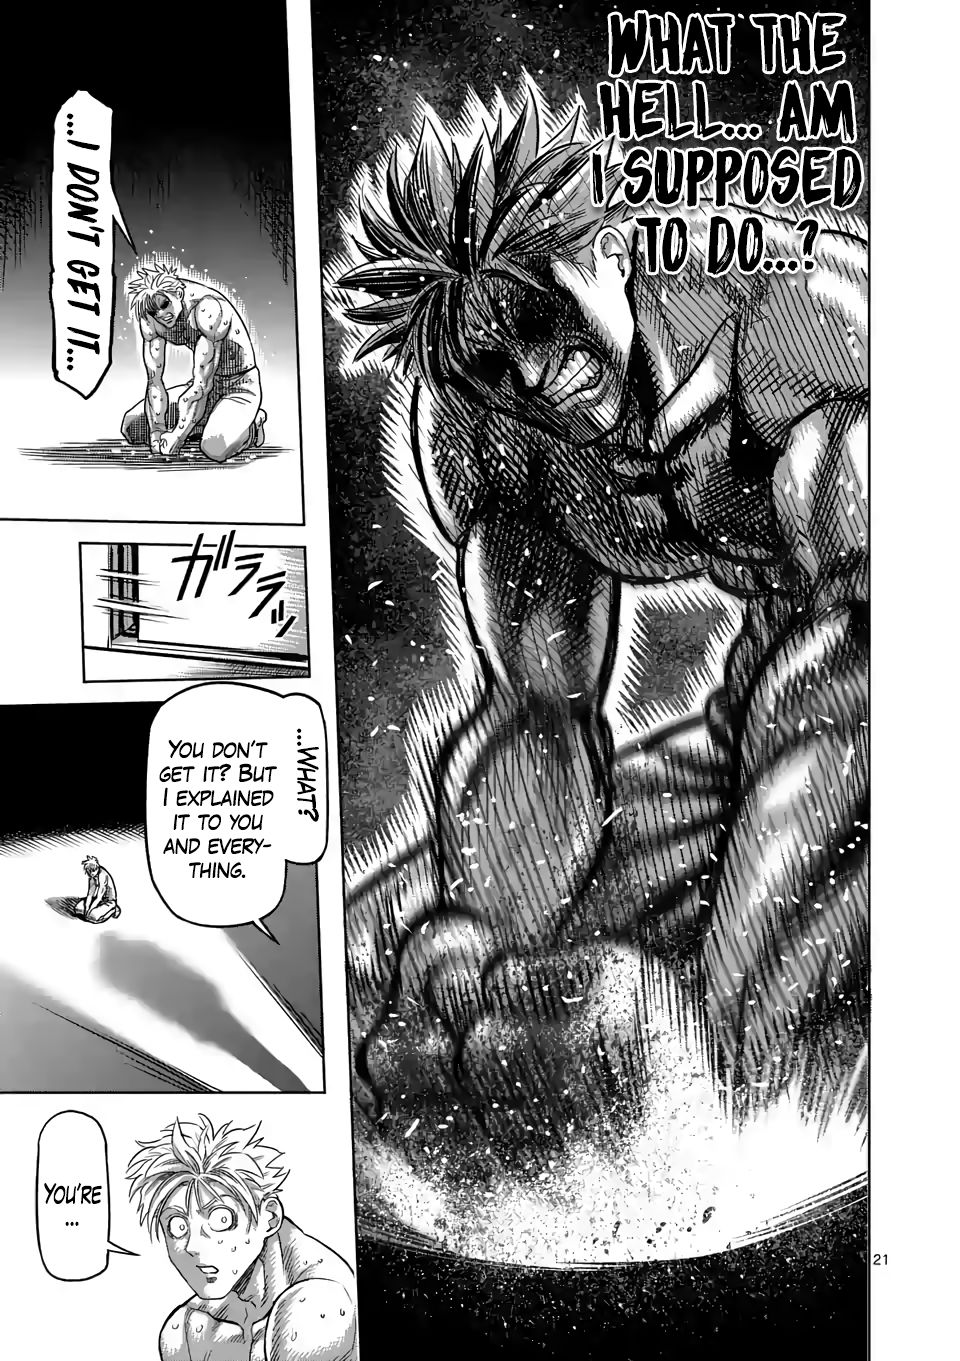 kengan Omega, Chapter 15: Ryuki vs. José - Kengan Ashura Manga Online